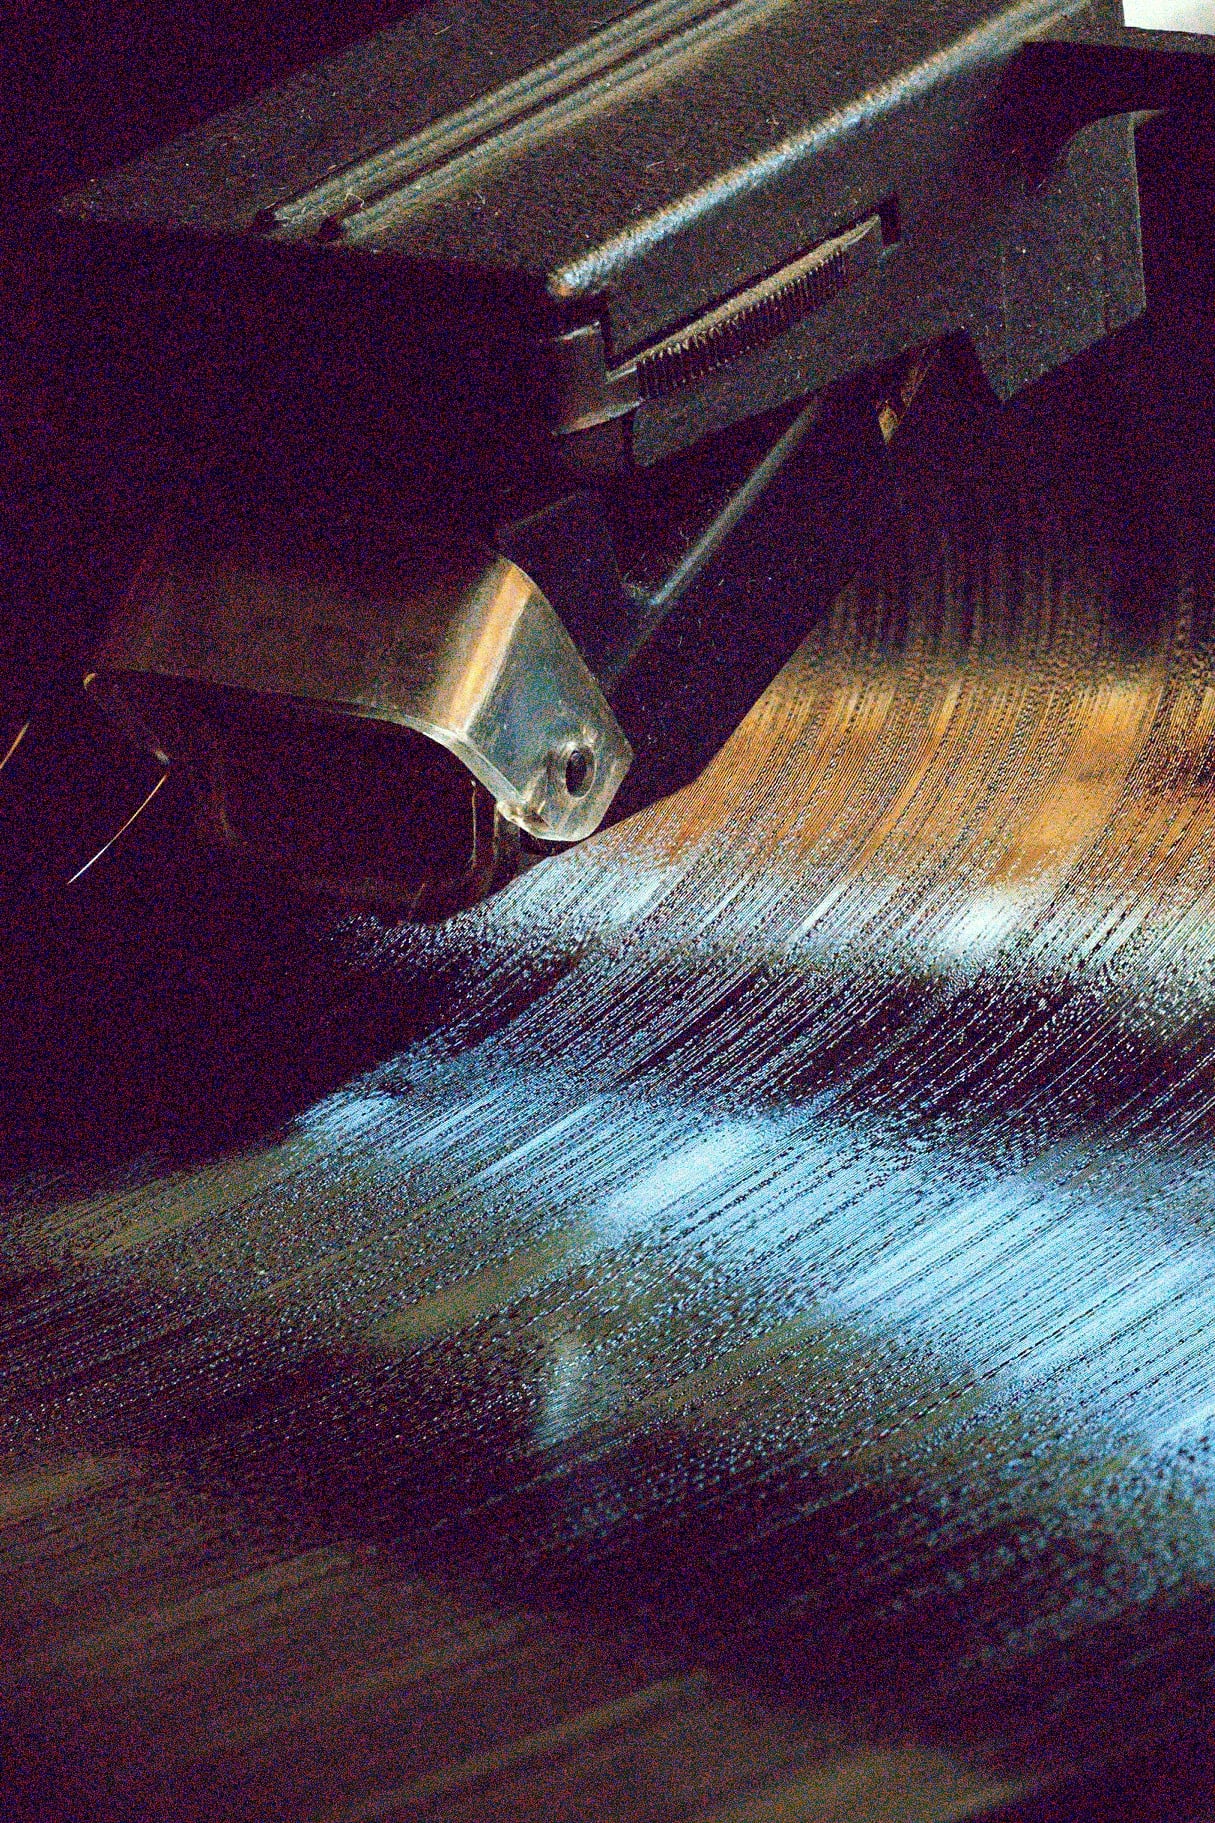 Vinyl: An Unlikely History